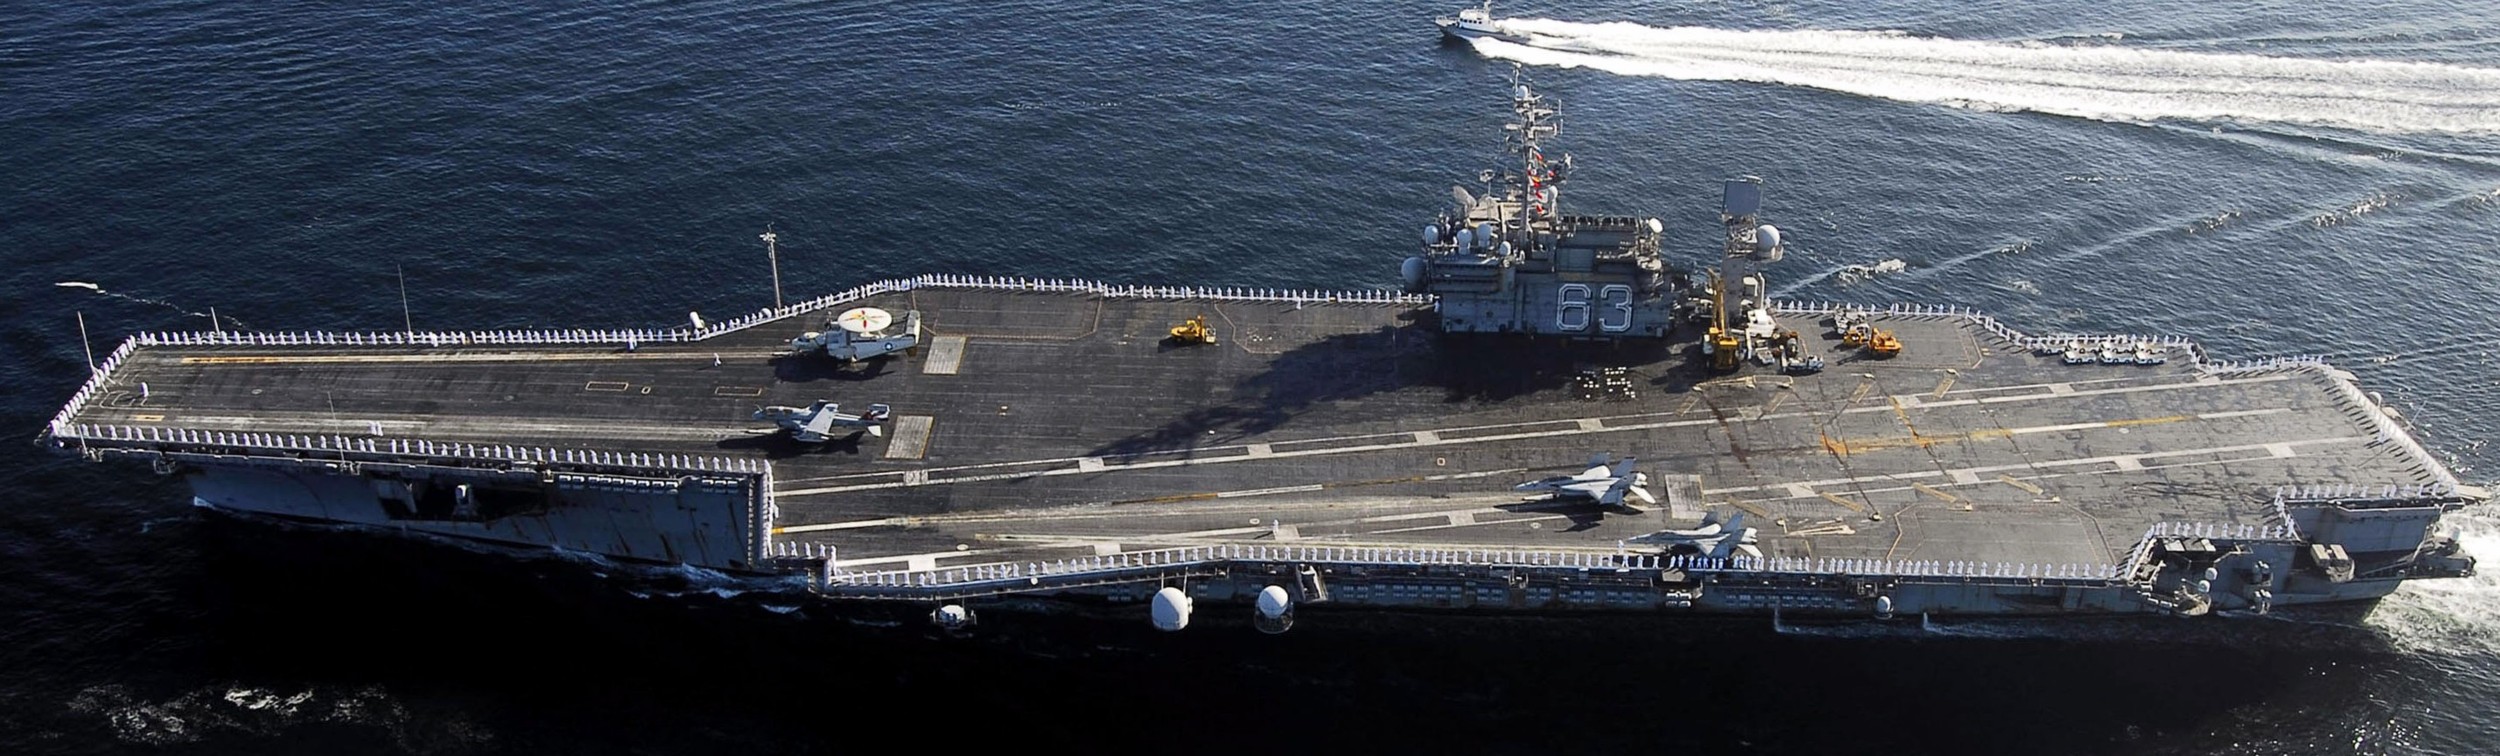 cv-63 uss kitty hawk aircraft carrier 92 yokosuka fleact